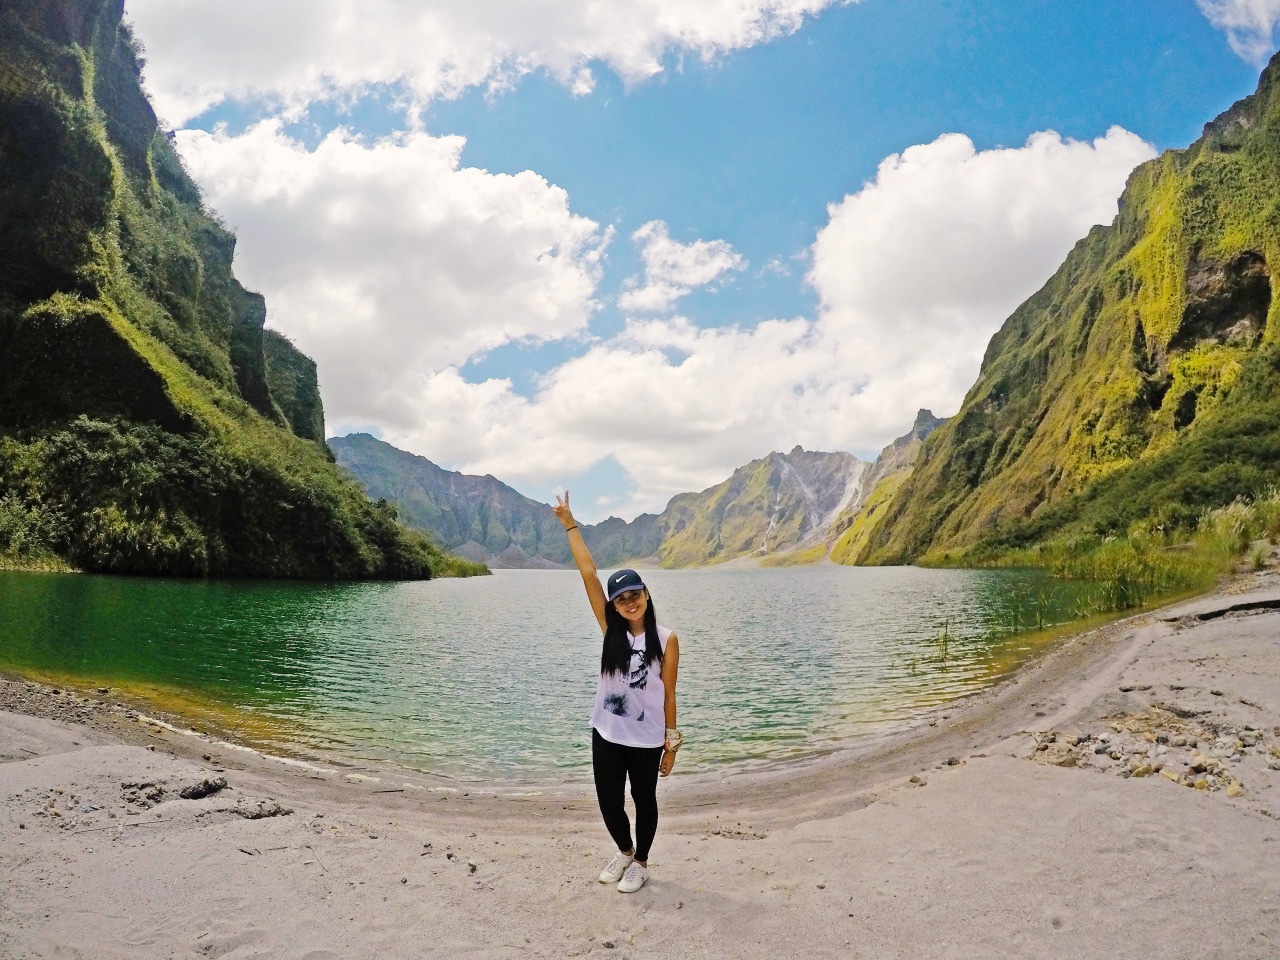 First Bundok Mount Pinatubo The Walking Sunshine 7870